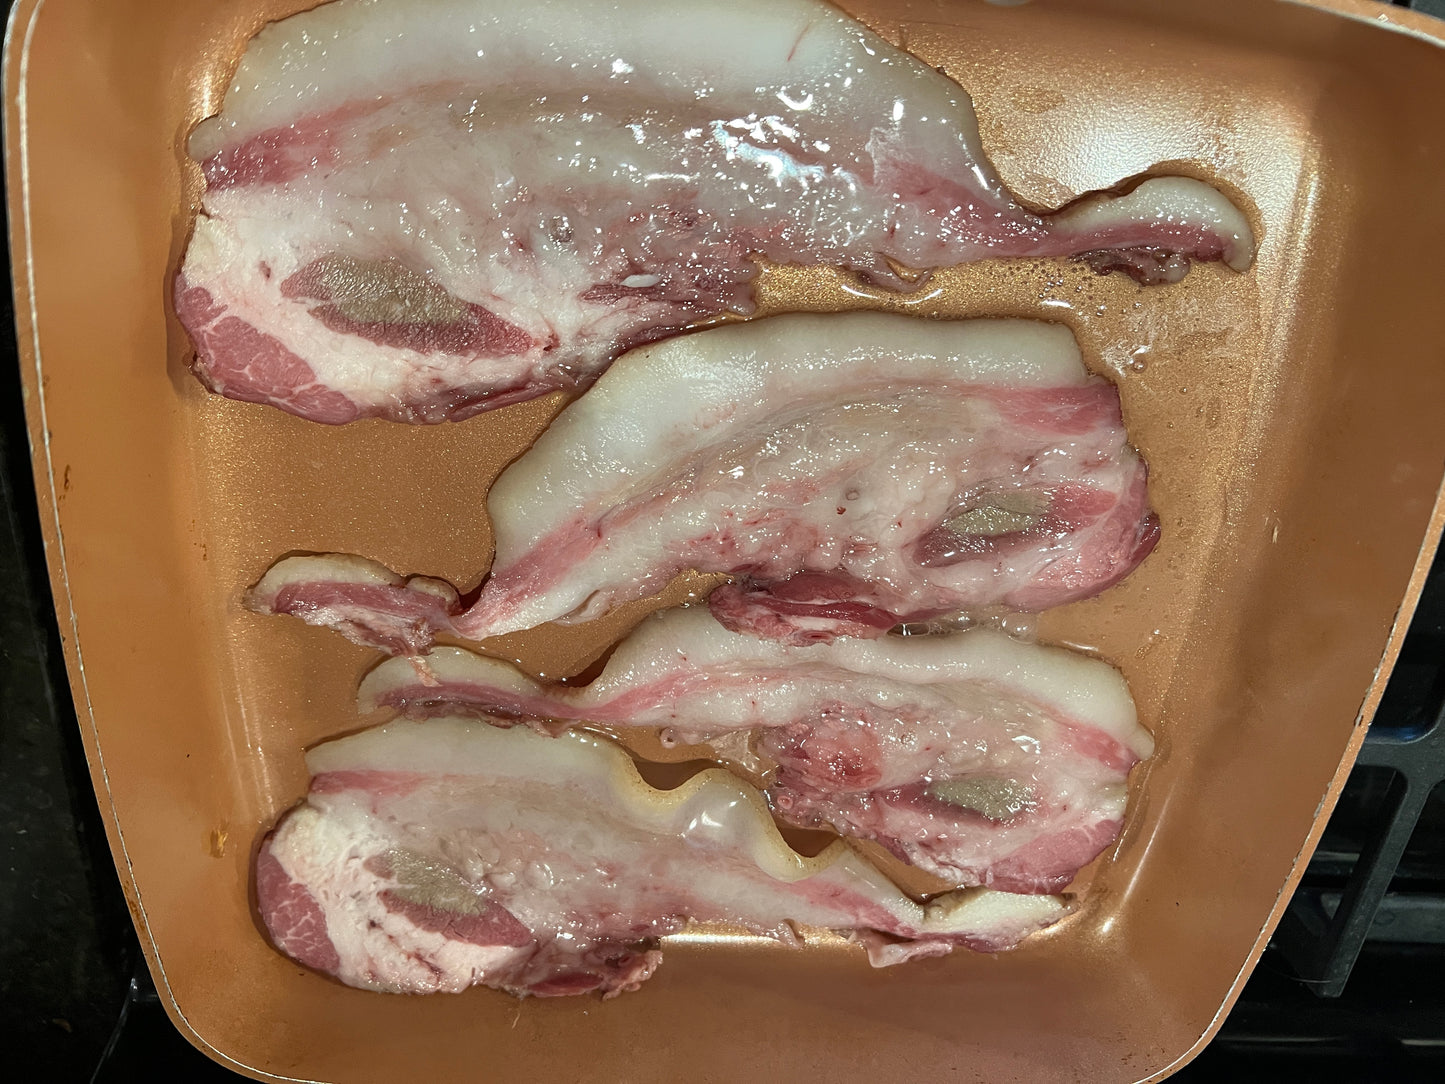 Organic Mangalista Gourmet Pastured Jowl Bacon